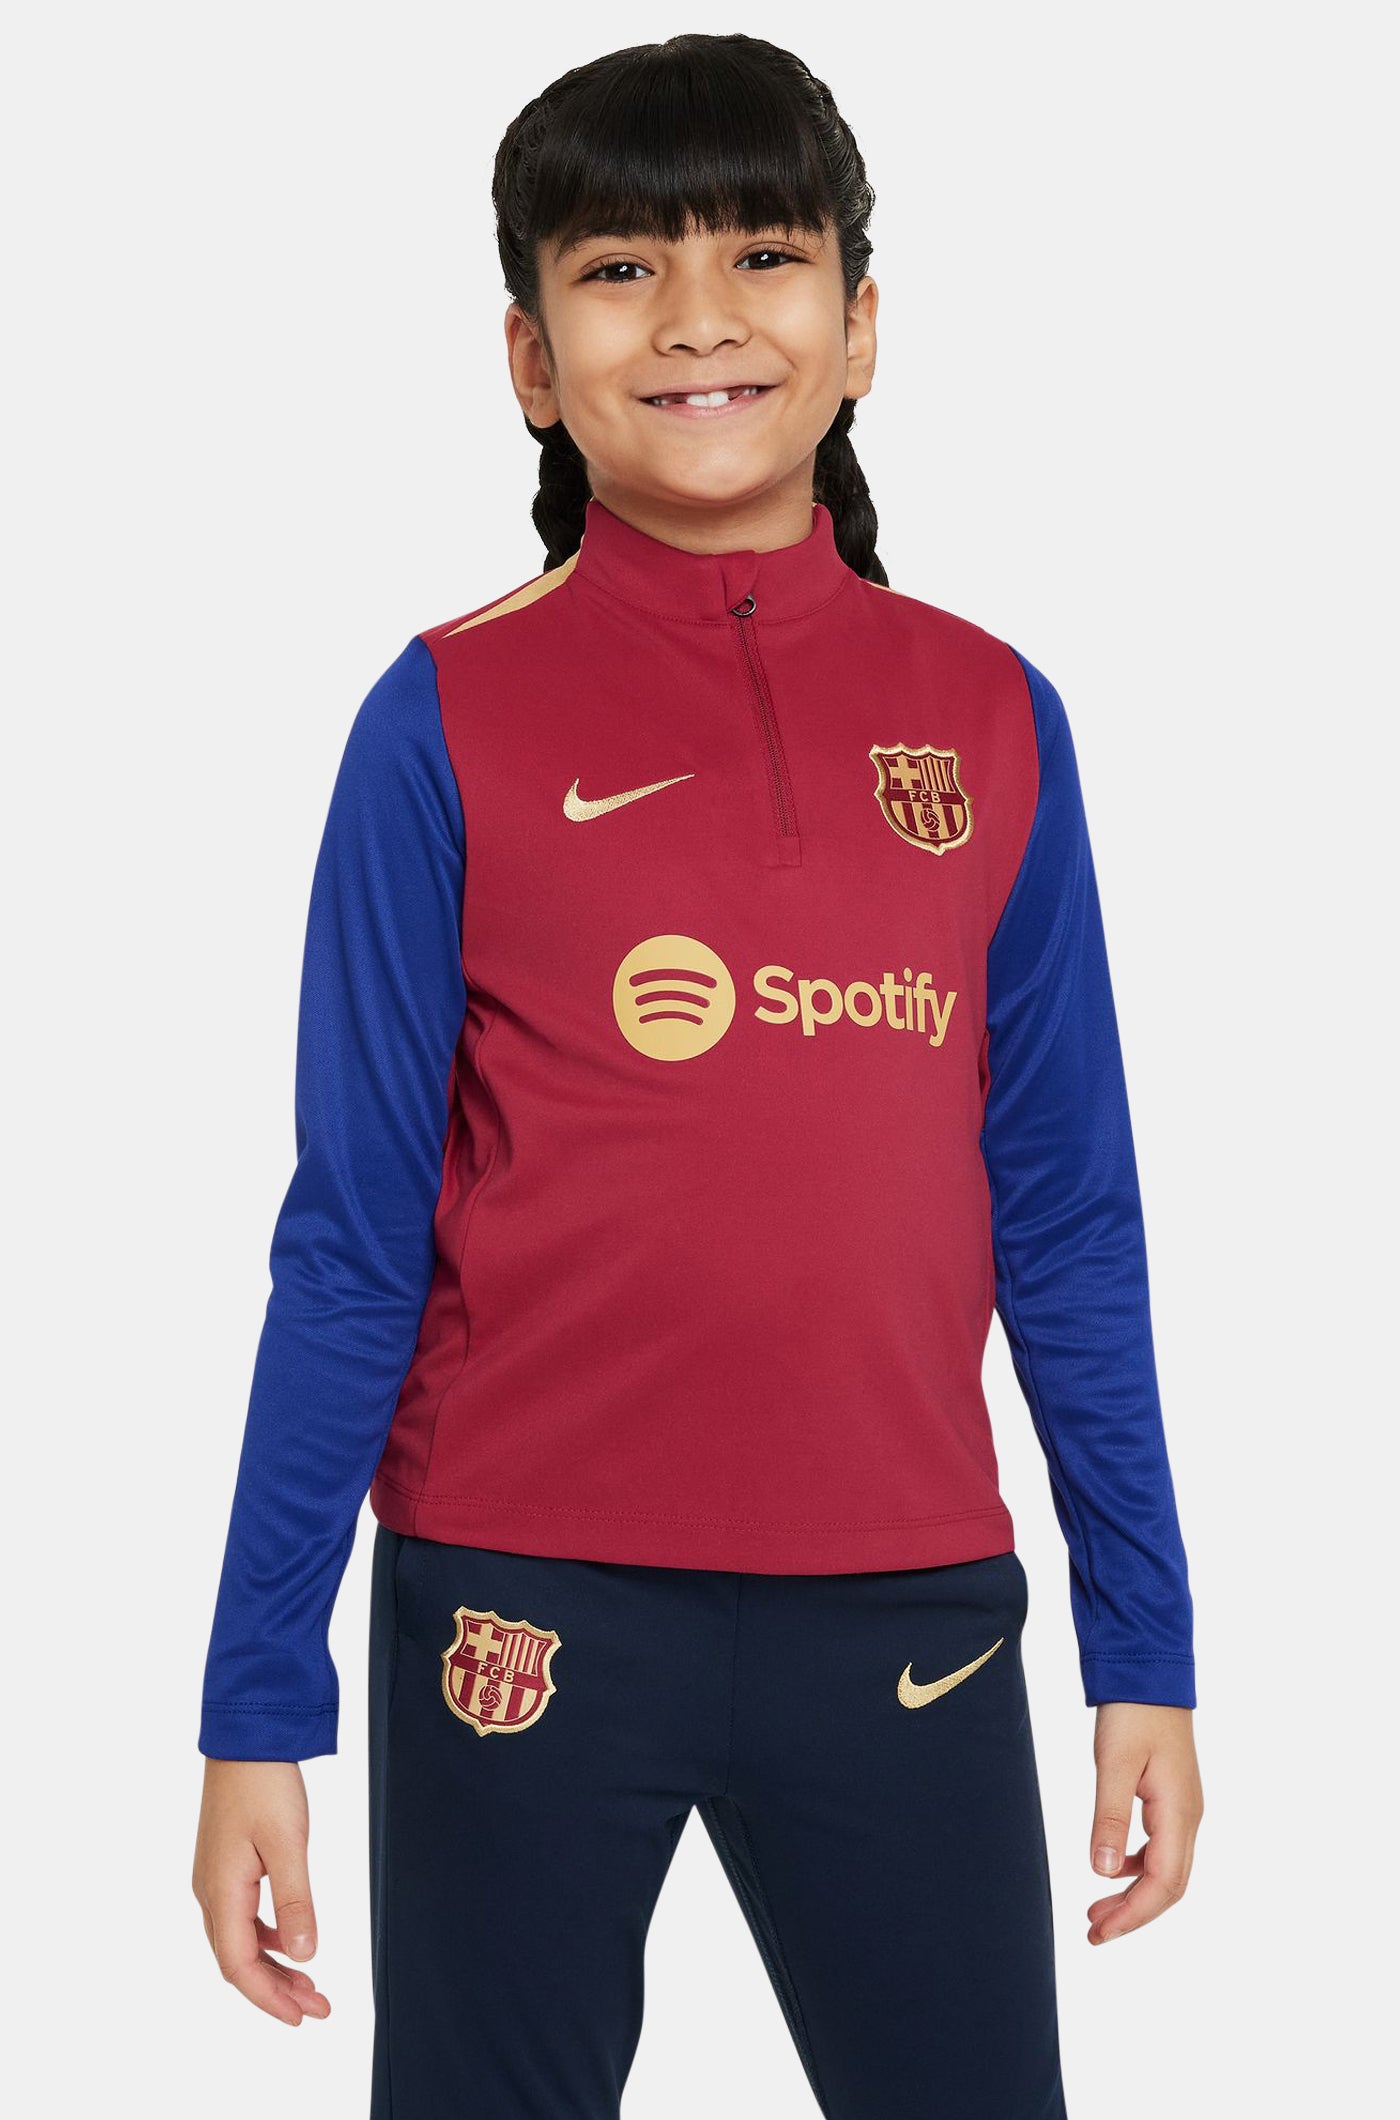 Chándal FC Barcelona 23/24 - Niño/a pequeño/a – Barça Official Store  Spotify Camp Nou